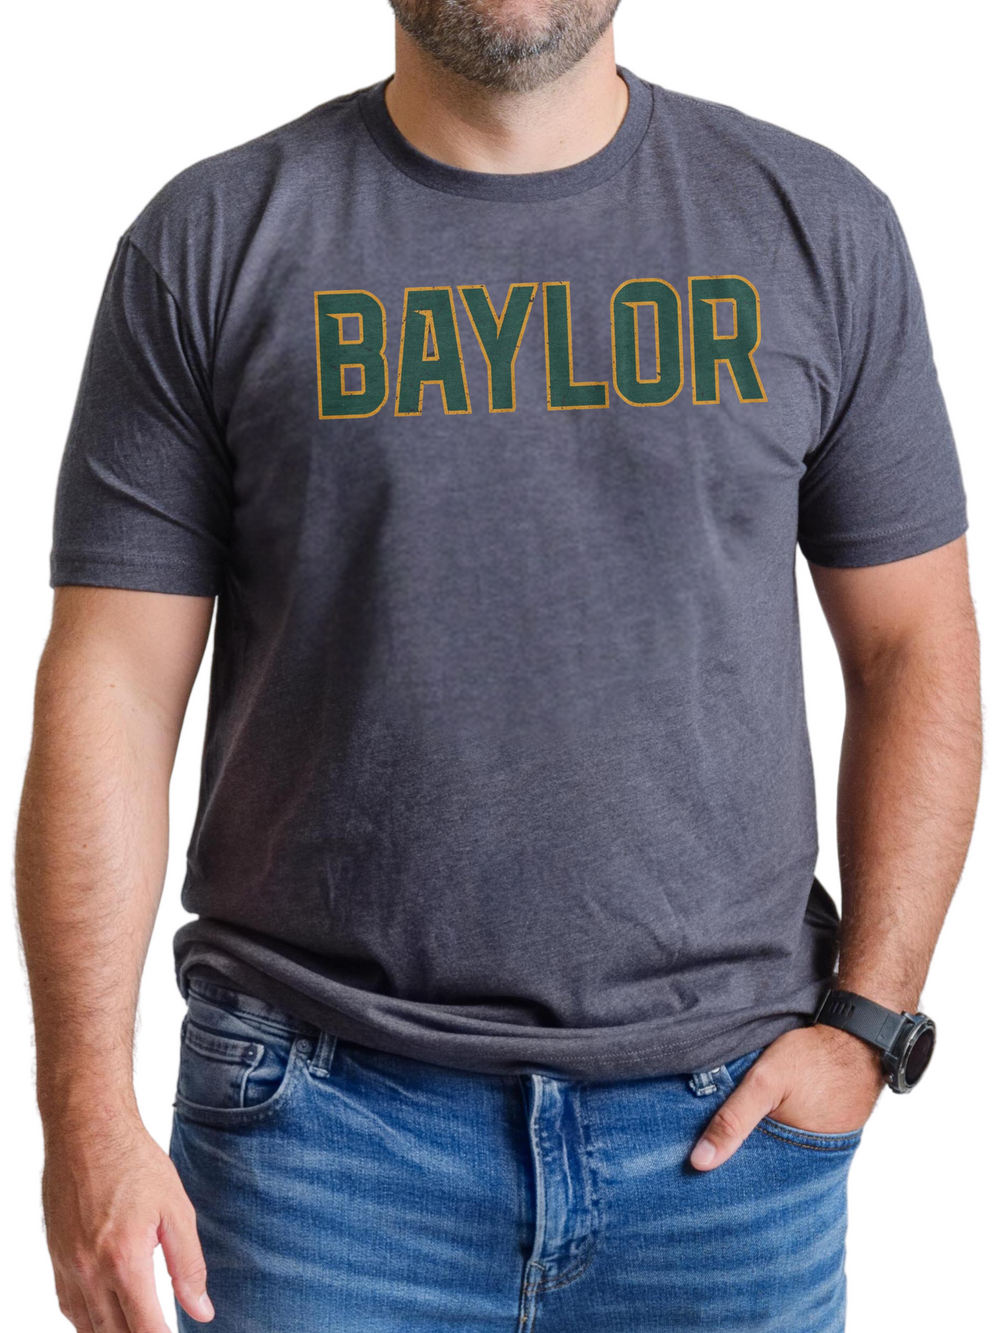 Baylor University Bears Wordmark Charcoal Super Soft T-Shirt on male model